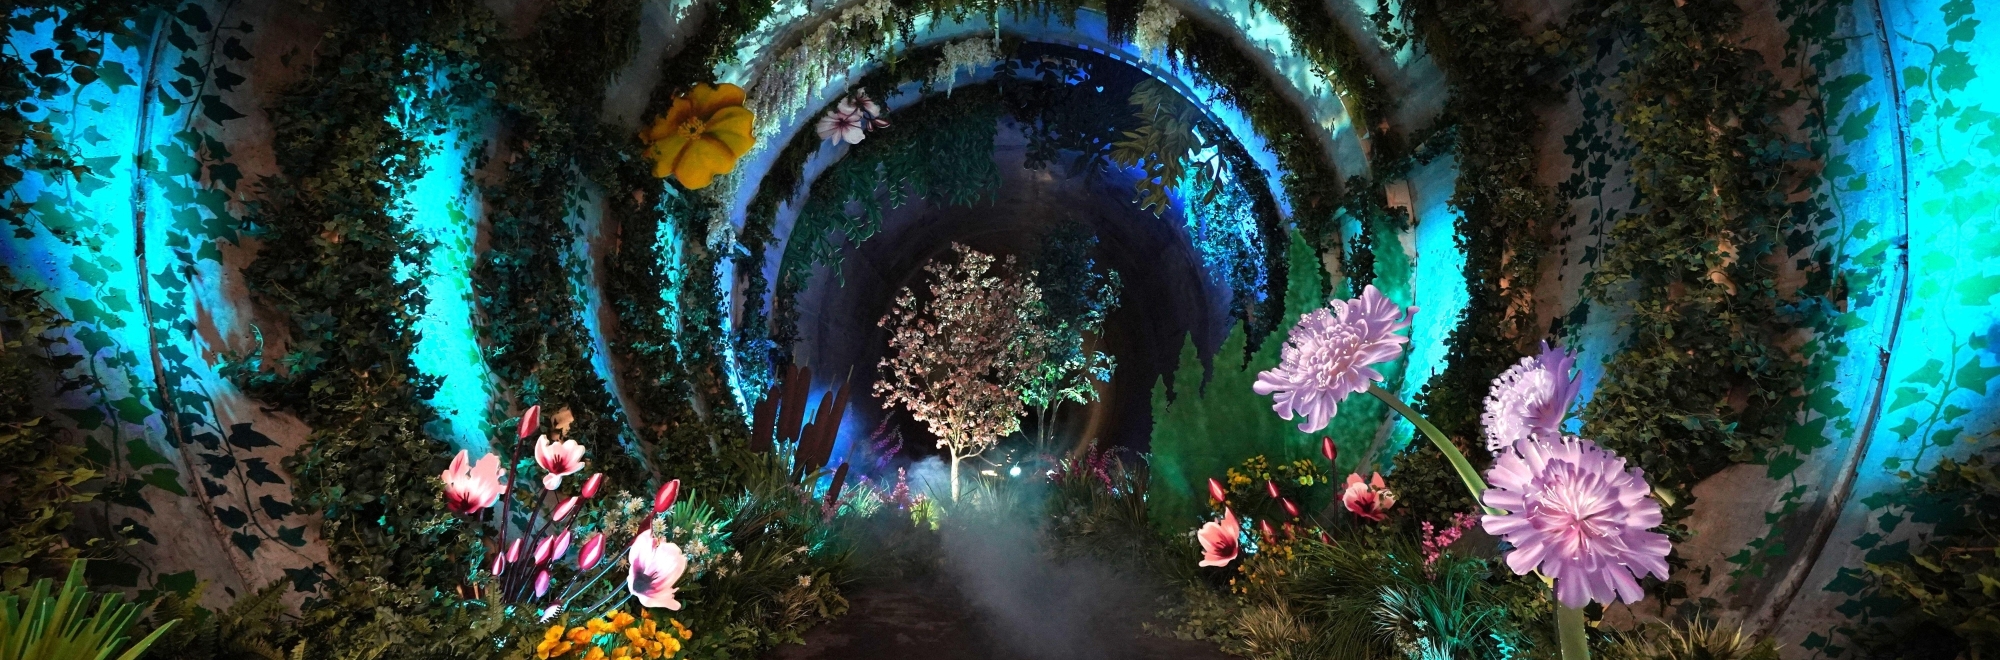 Loo Gardens: Tideway launches hidden subterranean garden in London’s super sewer